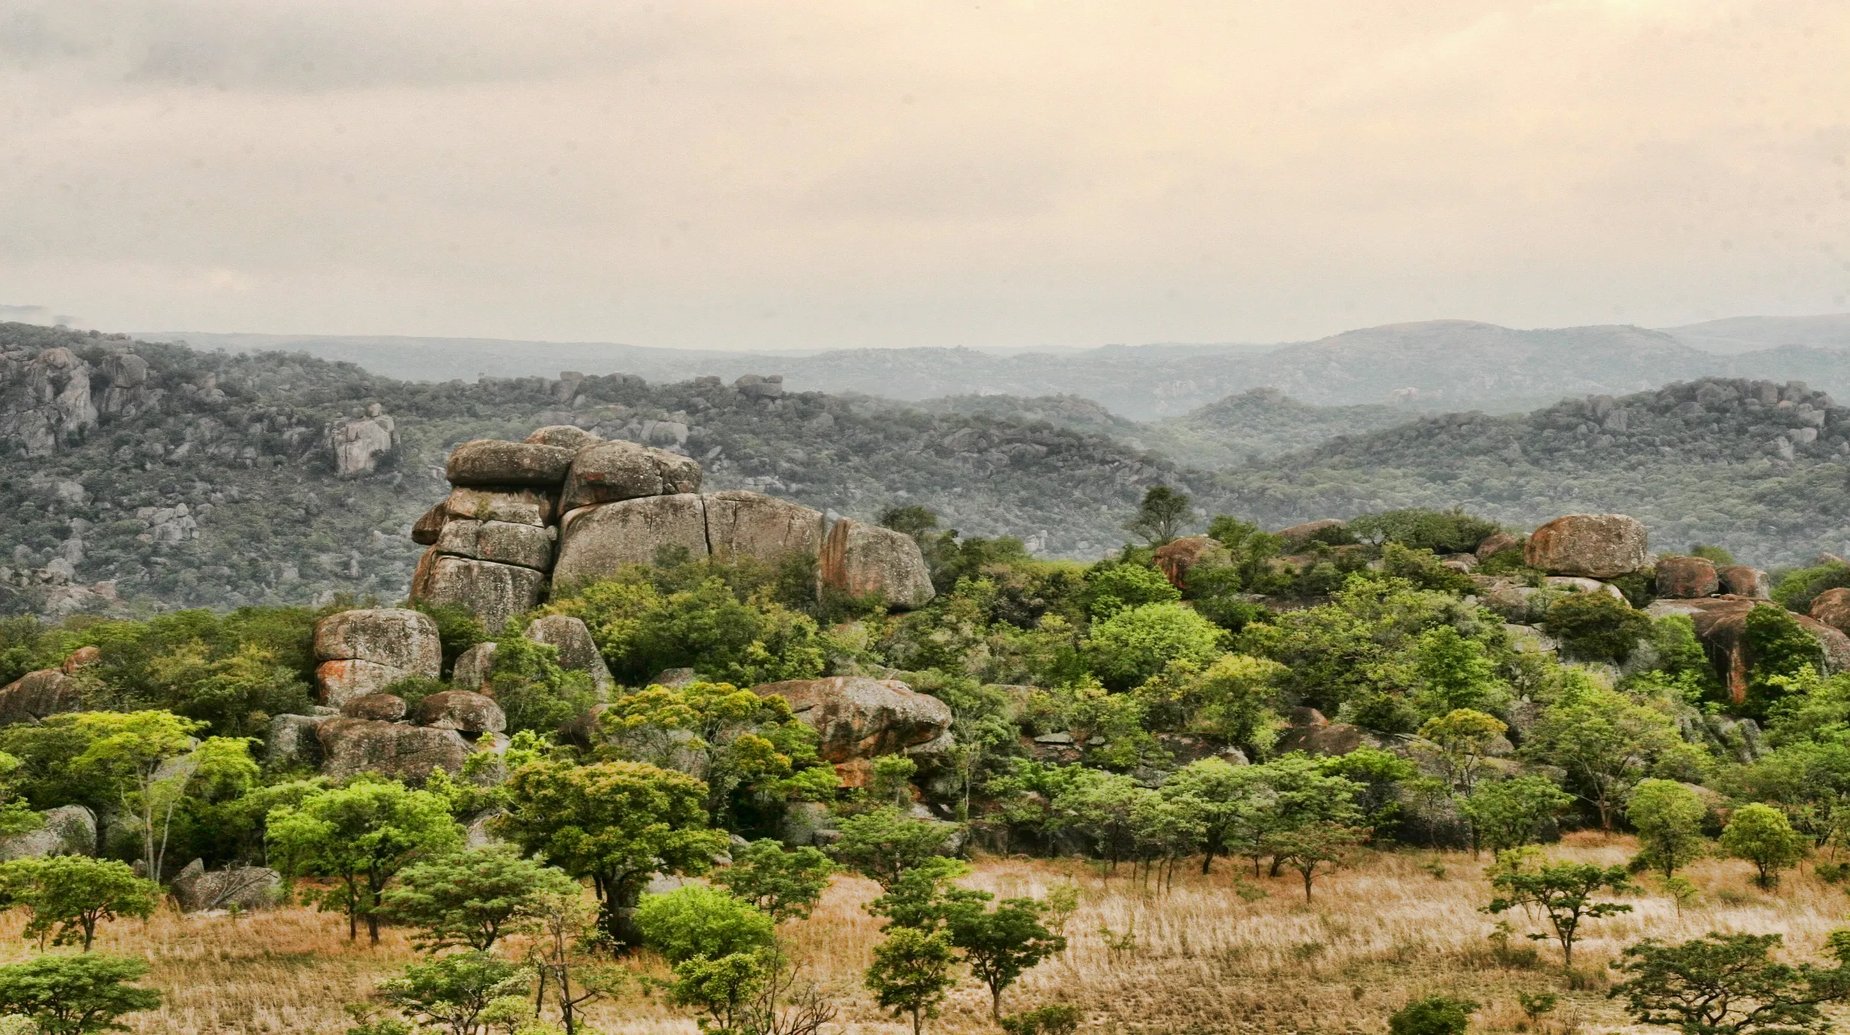 Afrika - Zimbabwe - Matopos National Park